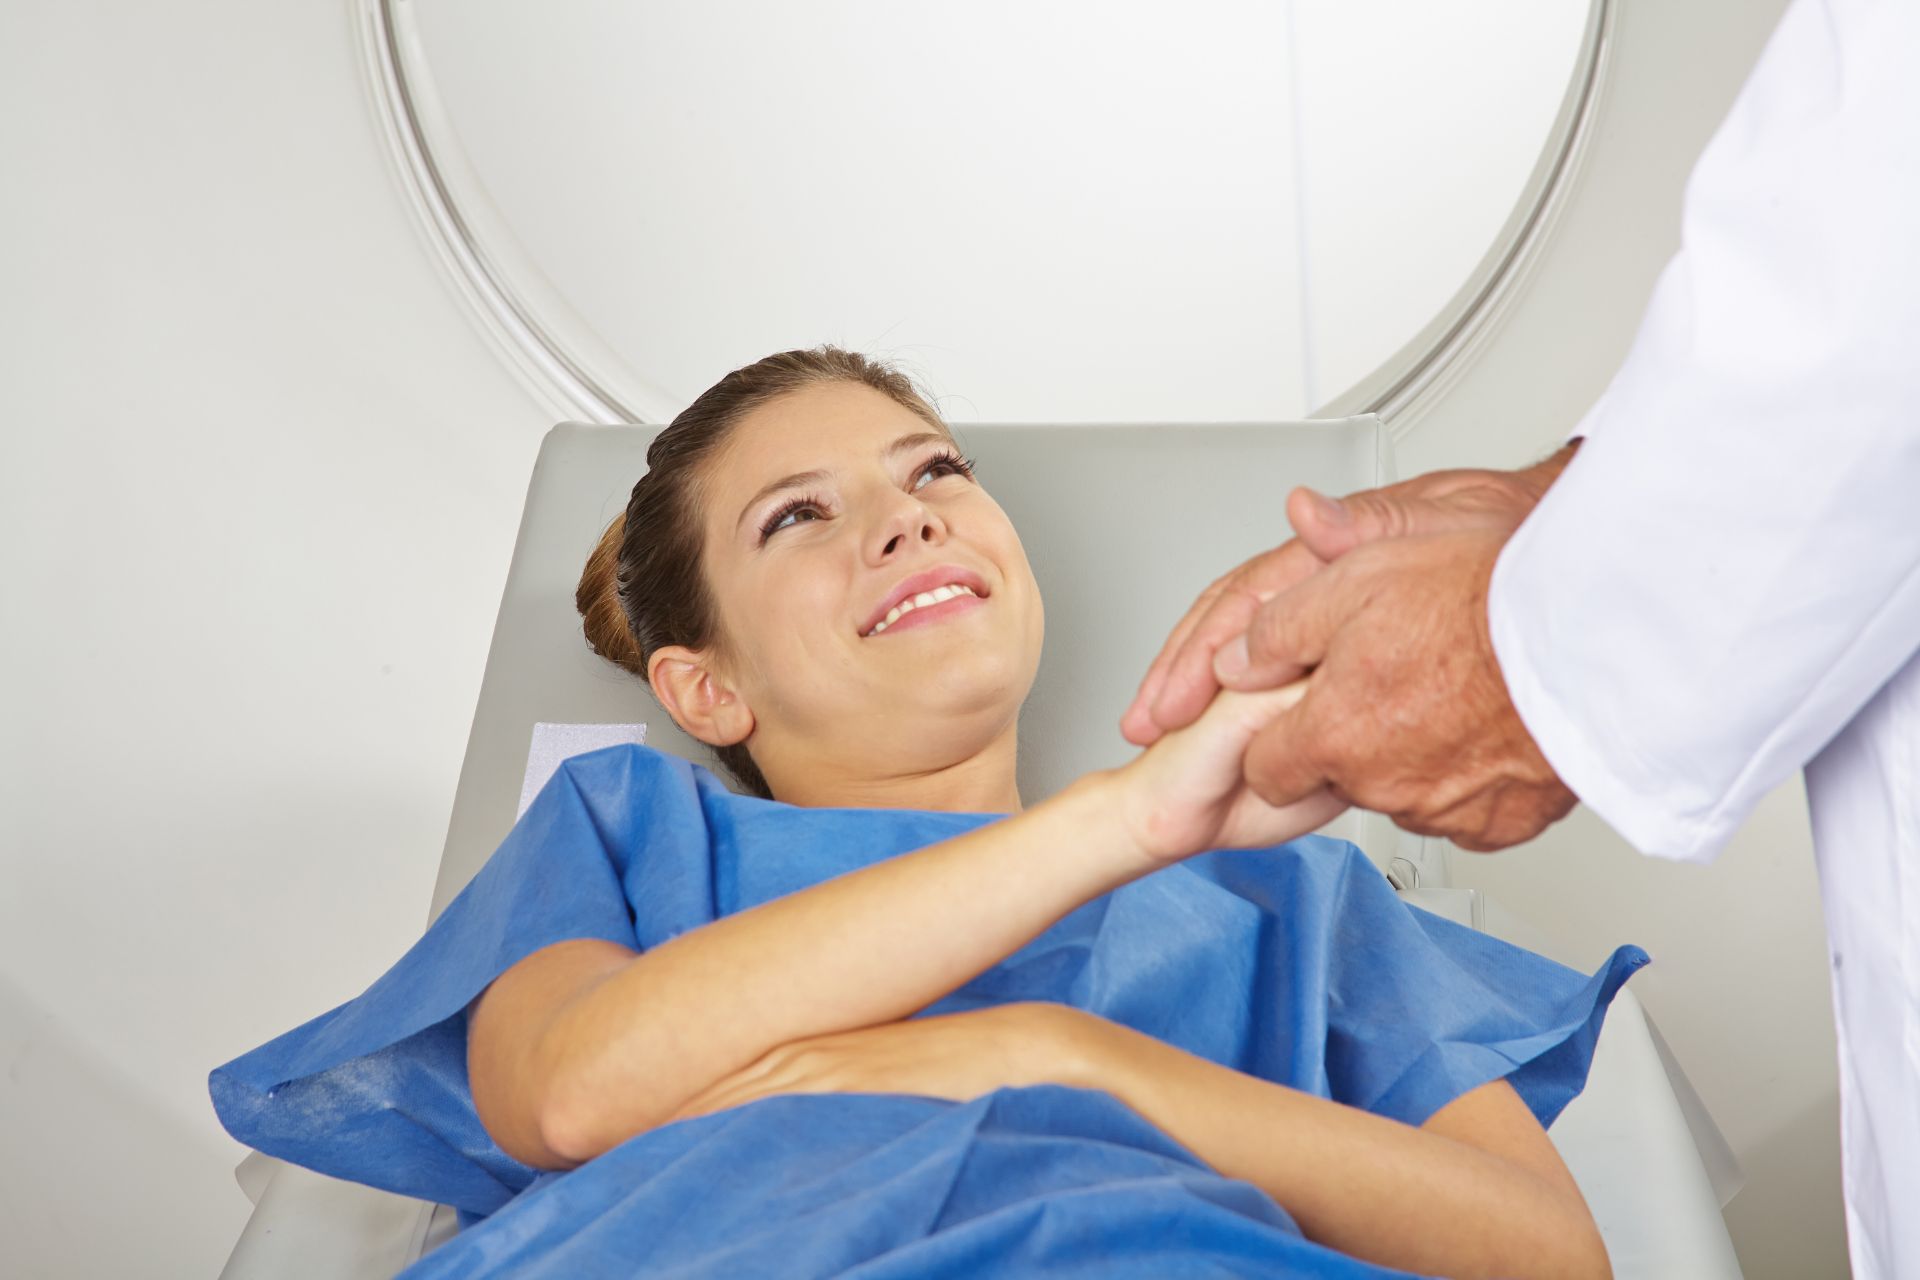 5 ways to help reduce MRI anxiety